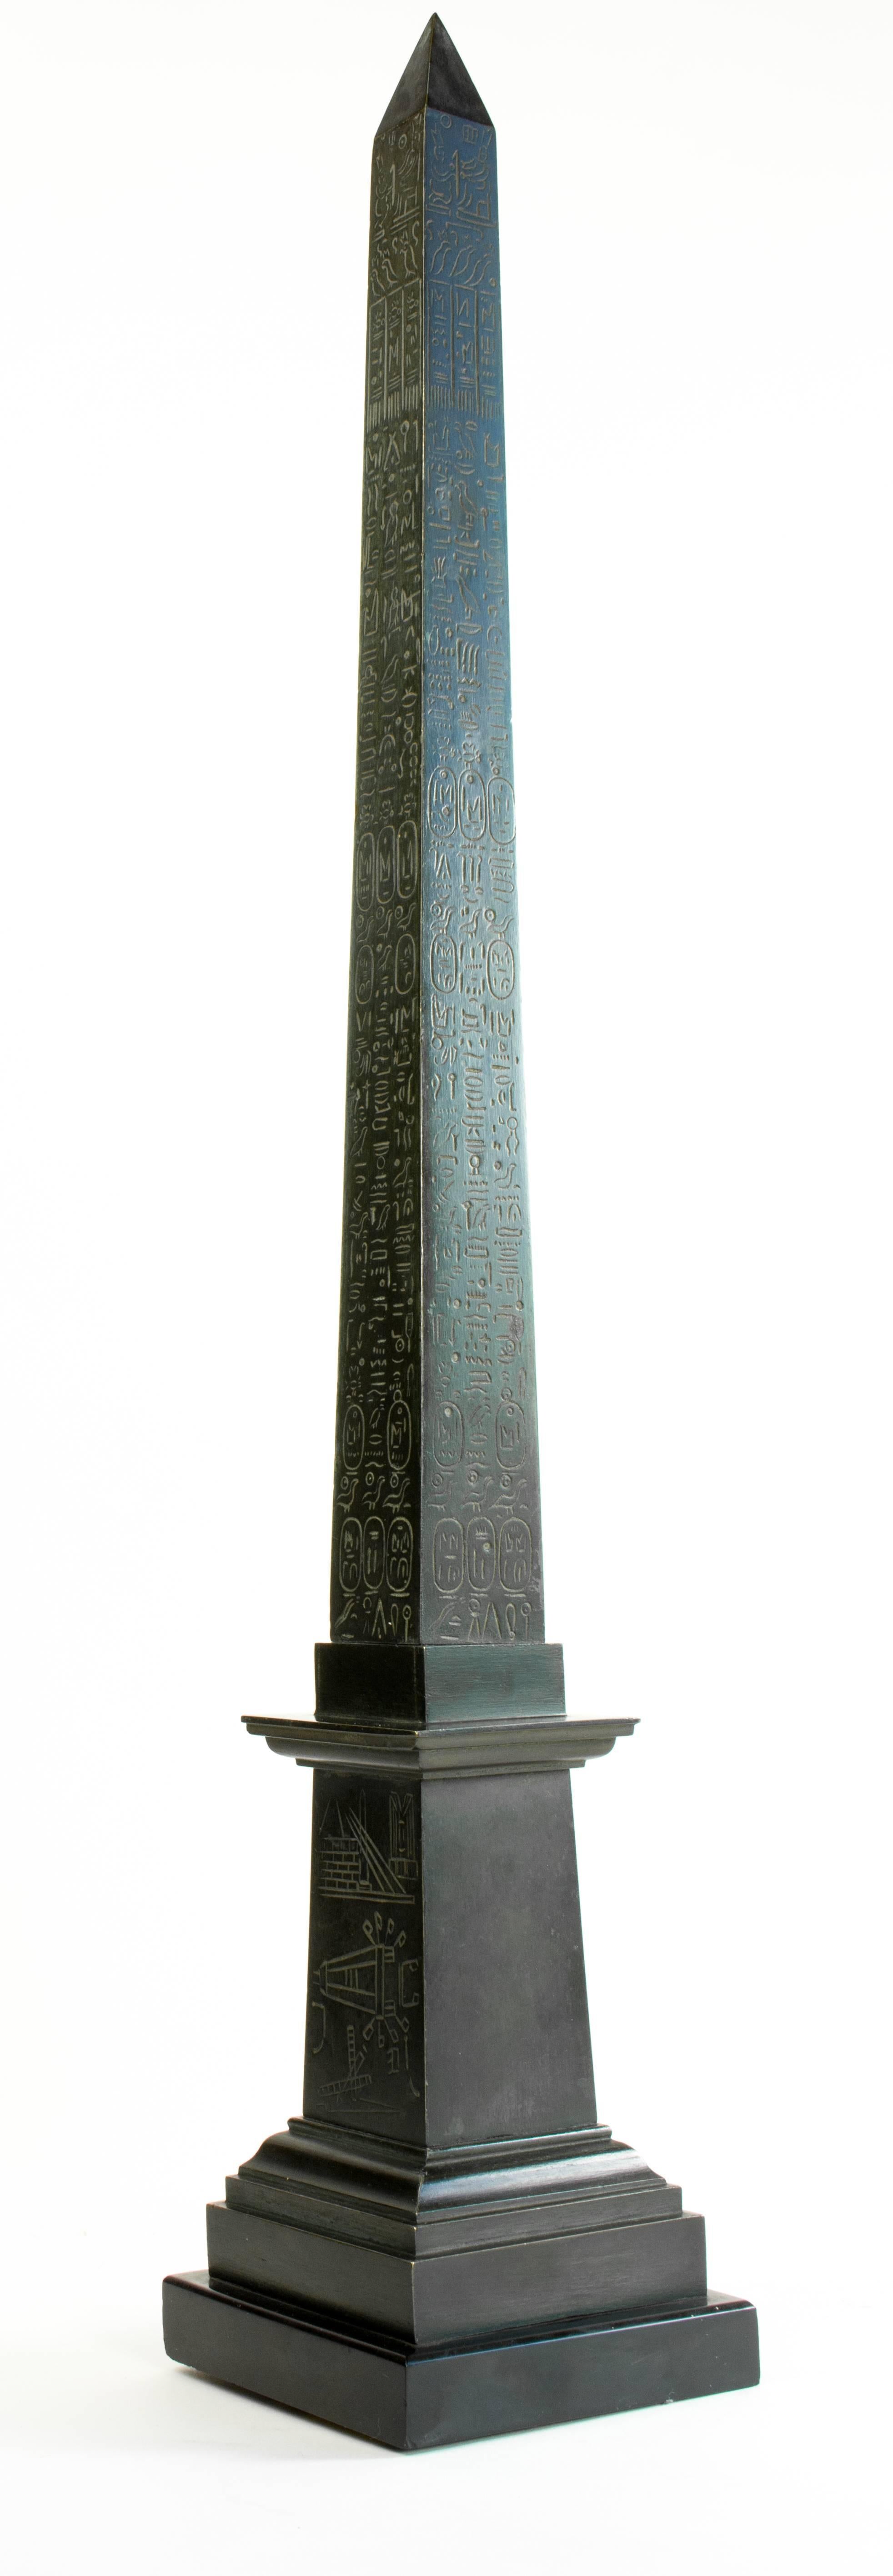 Luxor Obelisk, Paris
Dark-patinated bronze on French slate base.
22